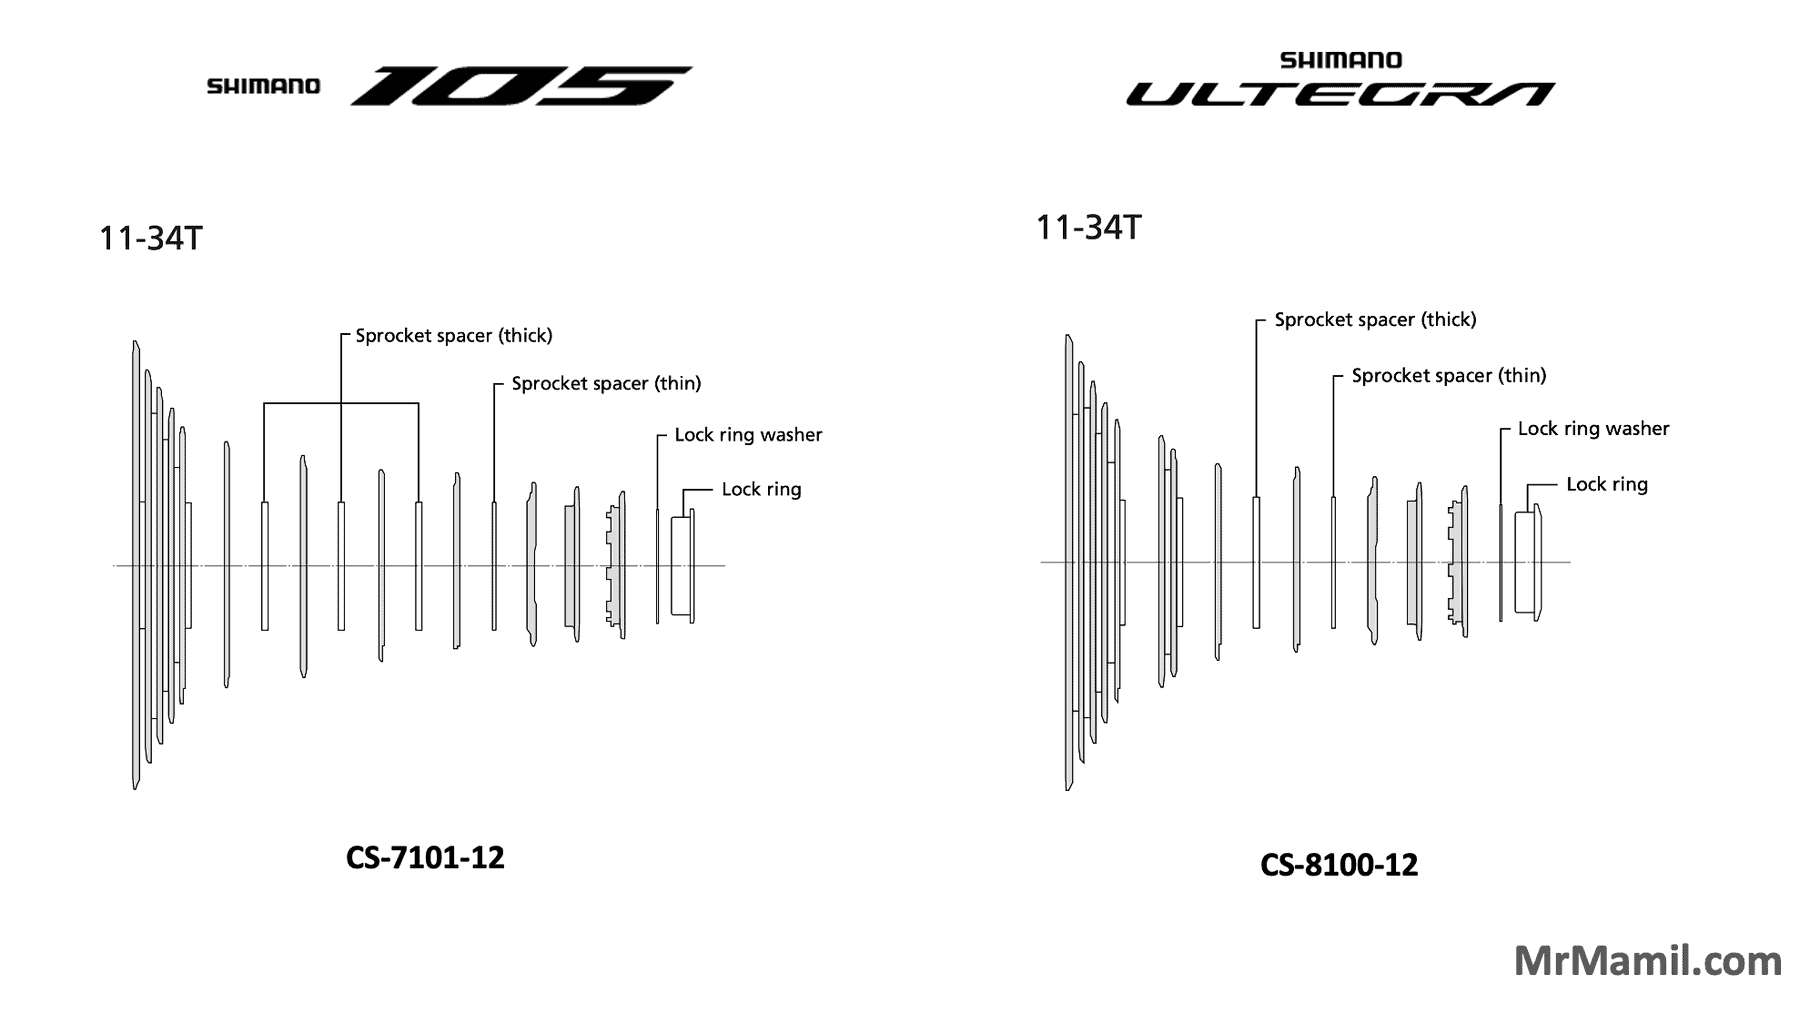 Shimano 105 vs Ultegra 12-speed Cassette Sprocket Patterns